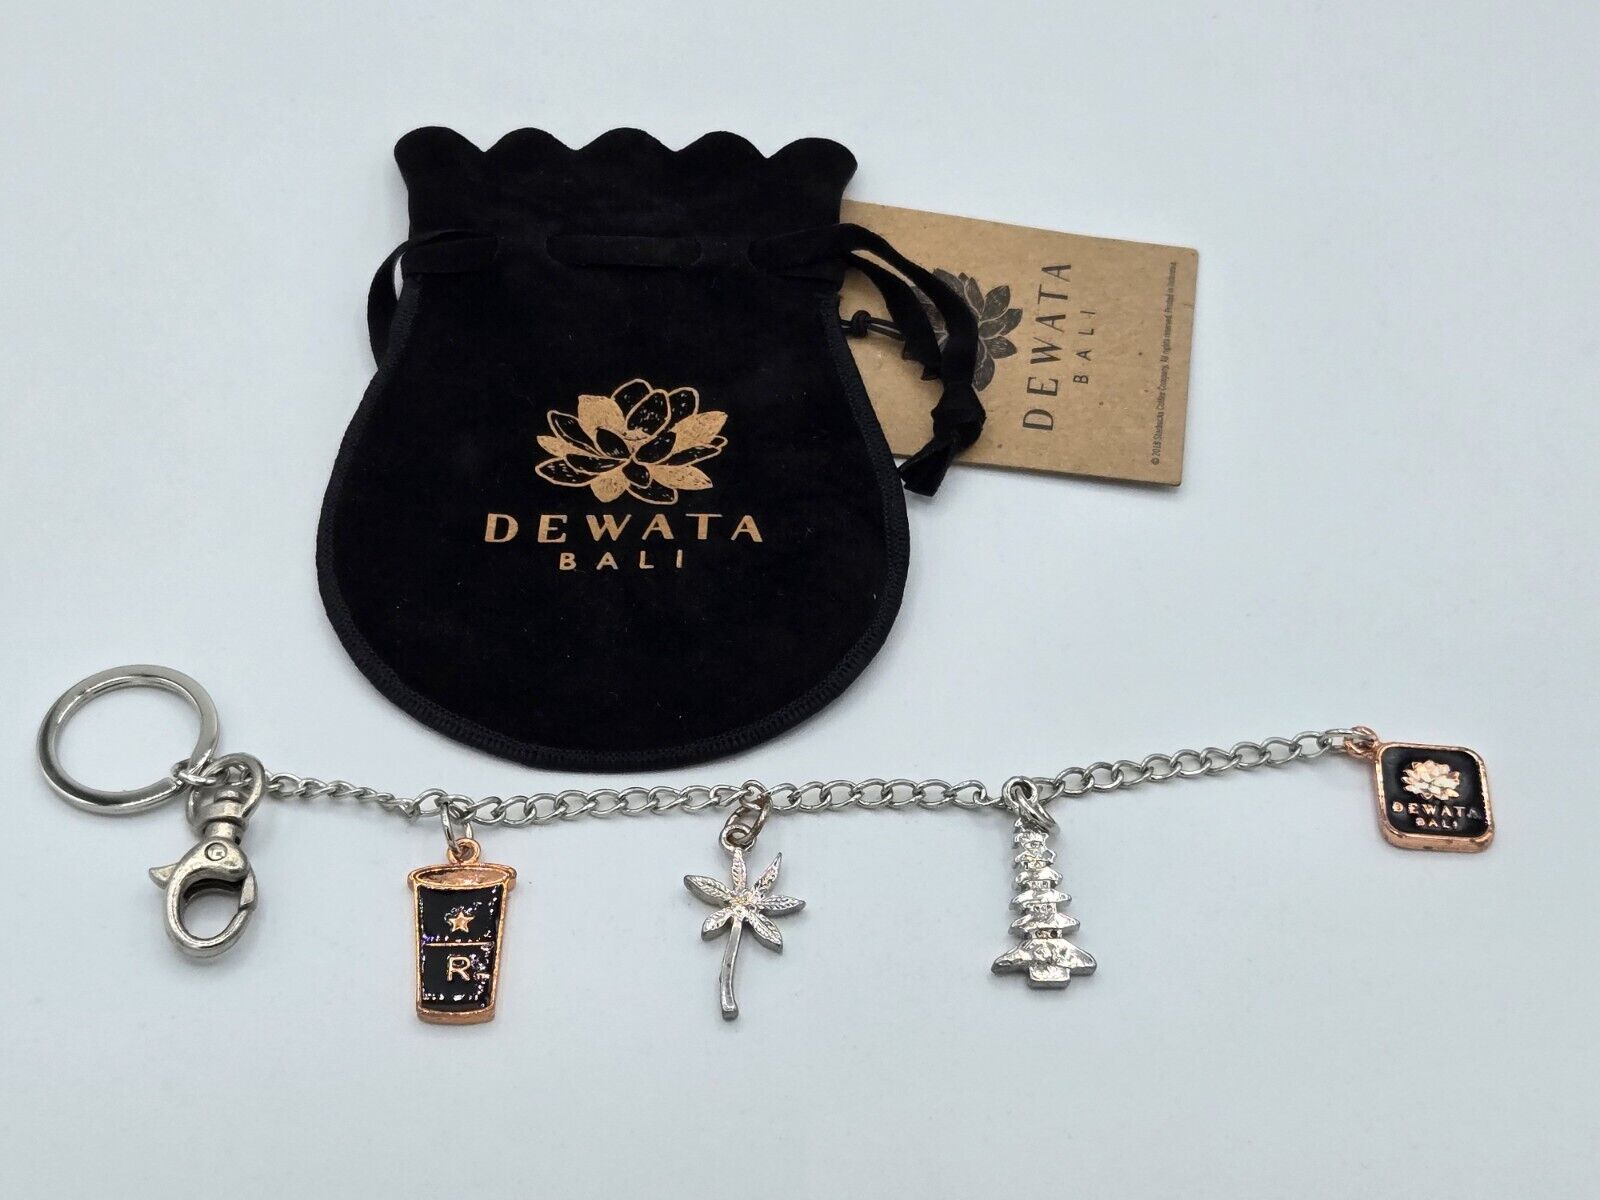 Starbucks Reserve Dewata Bali Indonesia Exclusive Charm Bracelet with Dust Bag